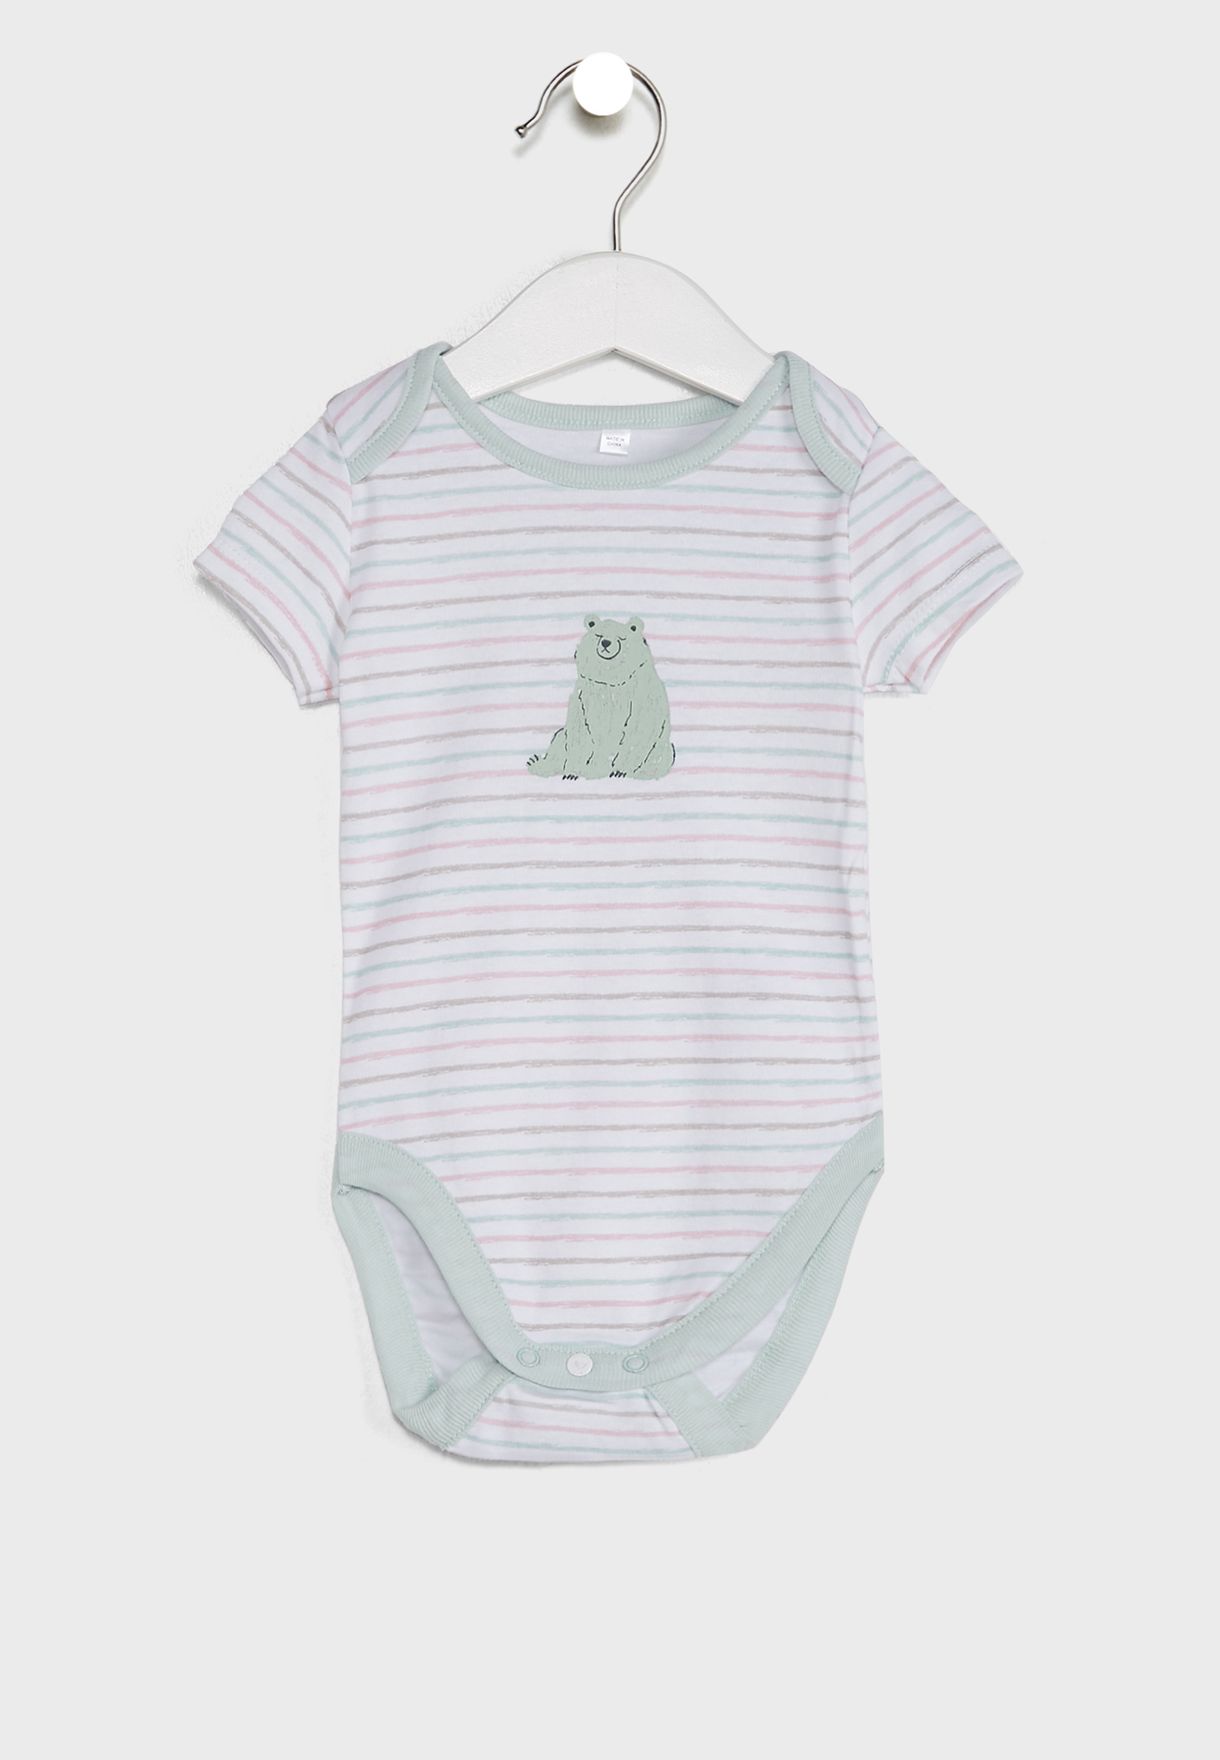 Infant Bear Print Sleepsuit, Bodysuit, Hat And Bib Set